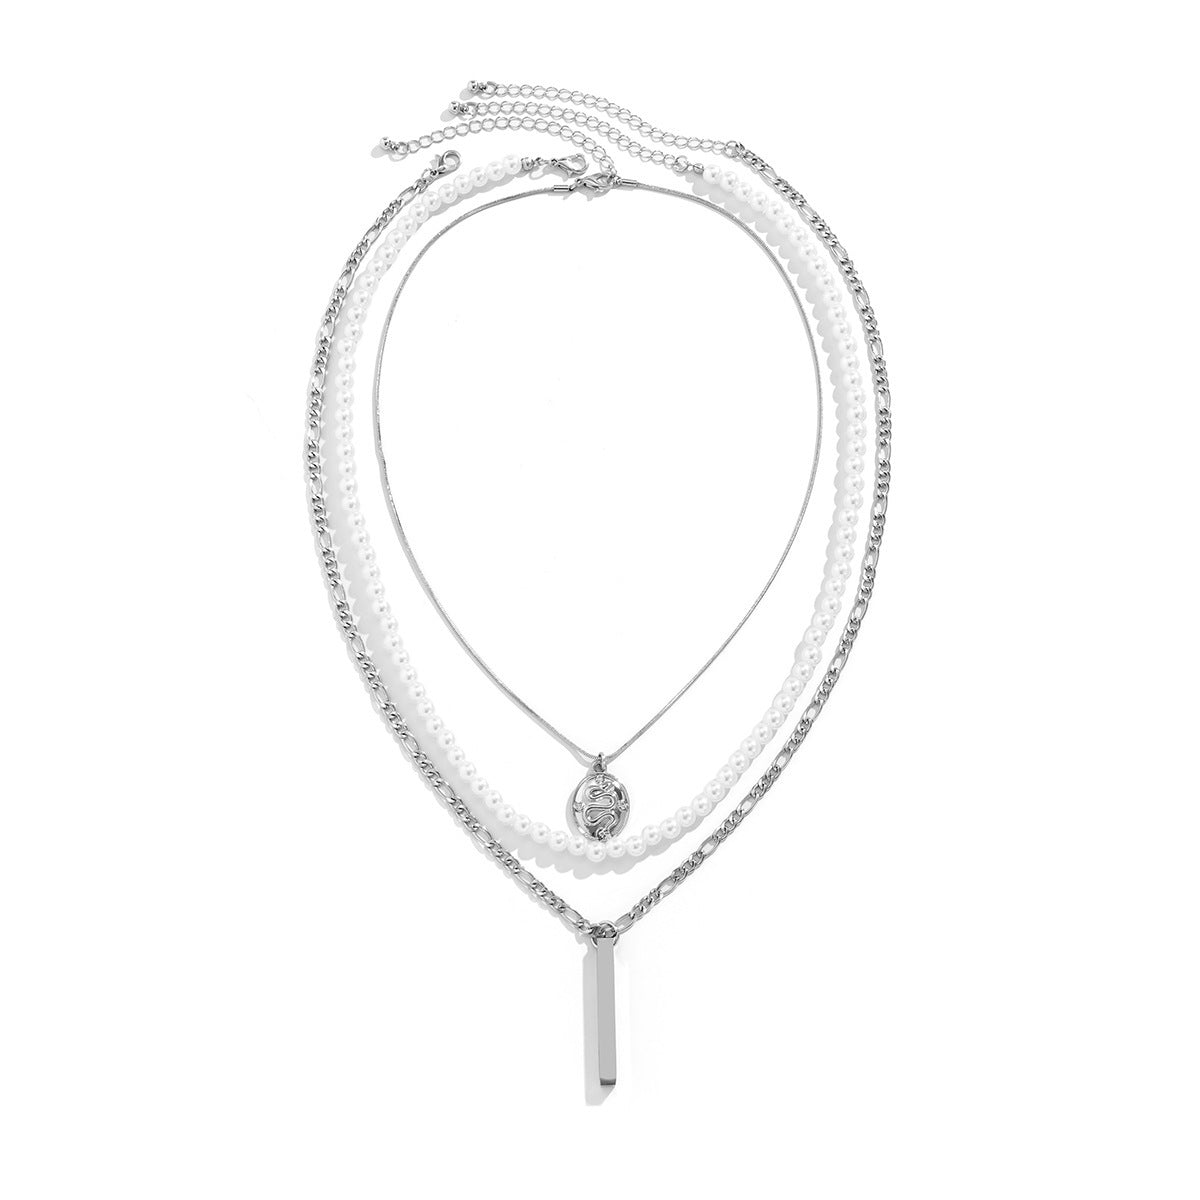 Men Fashion Multi-layered Pearl Snake Bone Chain Dragon Tag Rectangular Pendant men Necklace